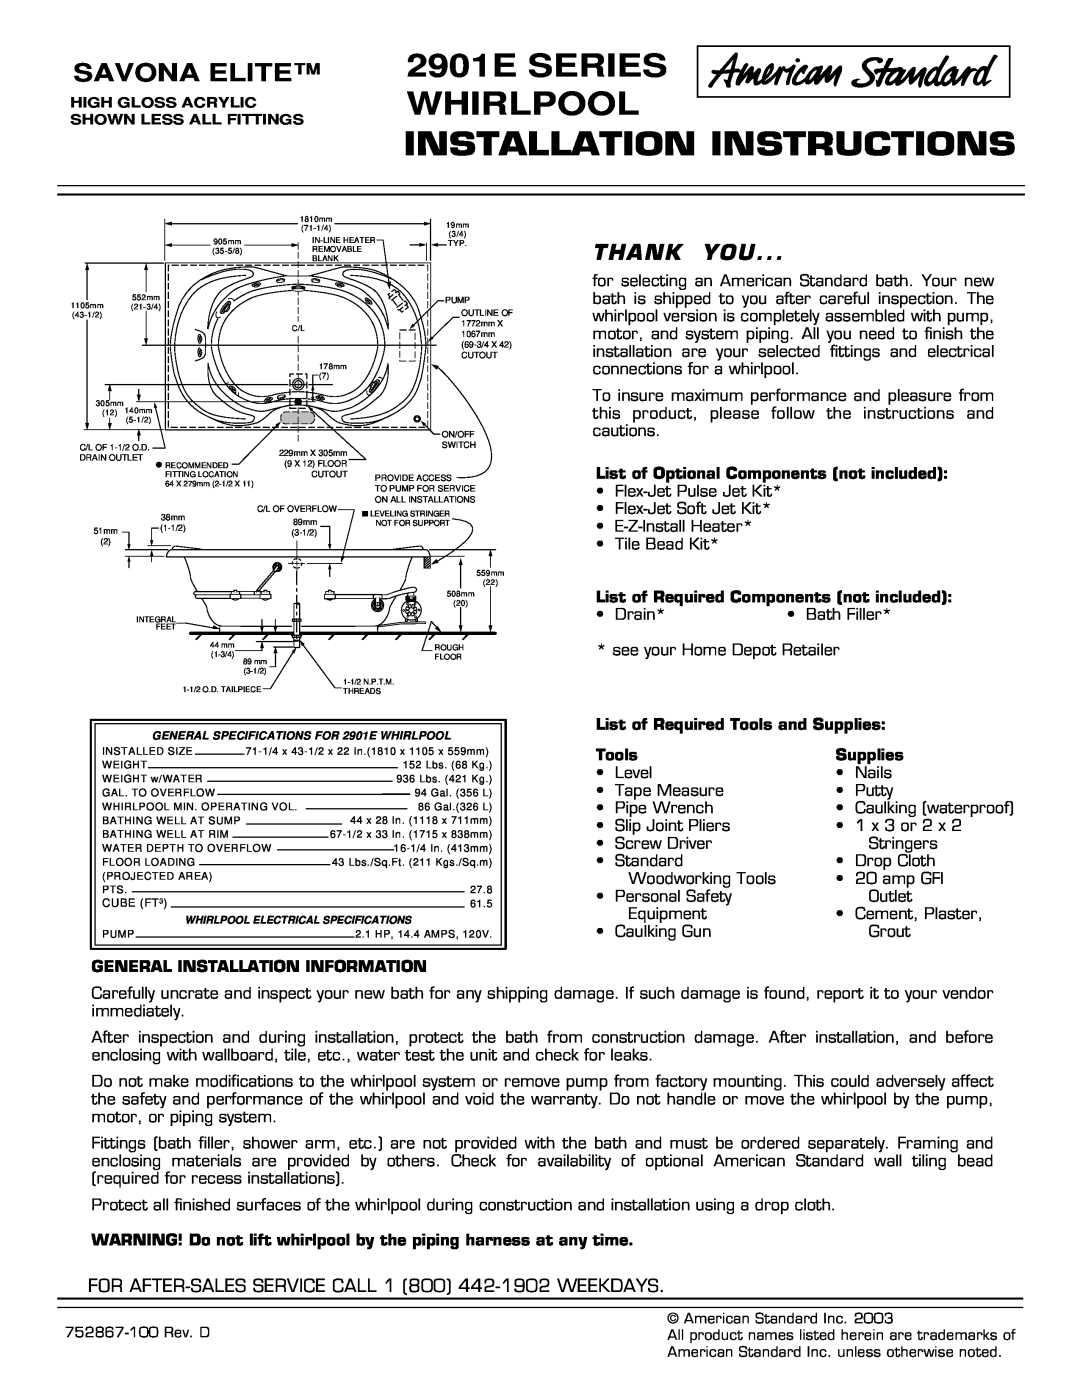 American Standard installation instructions 2901E SERIES WHIRLPOOL, Installation Instructions, Savona Elite, Thank You 